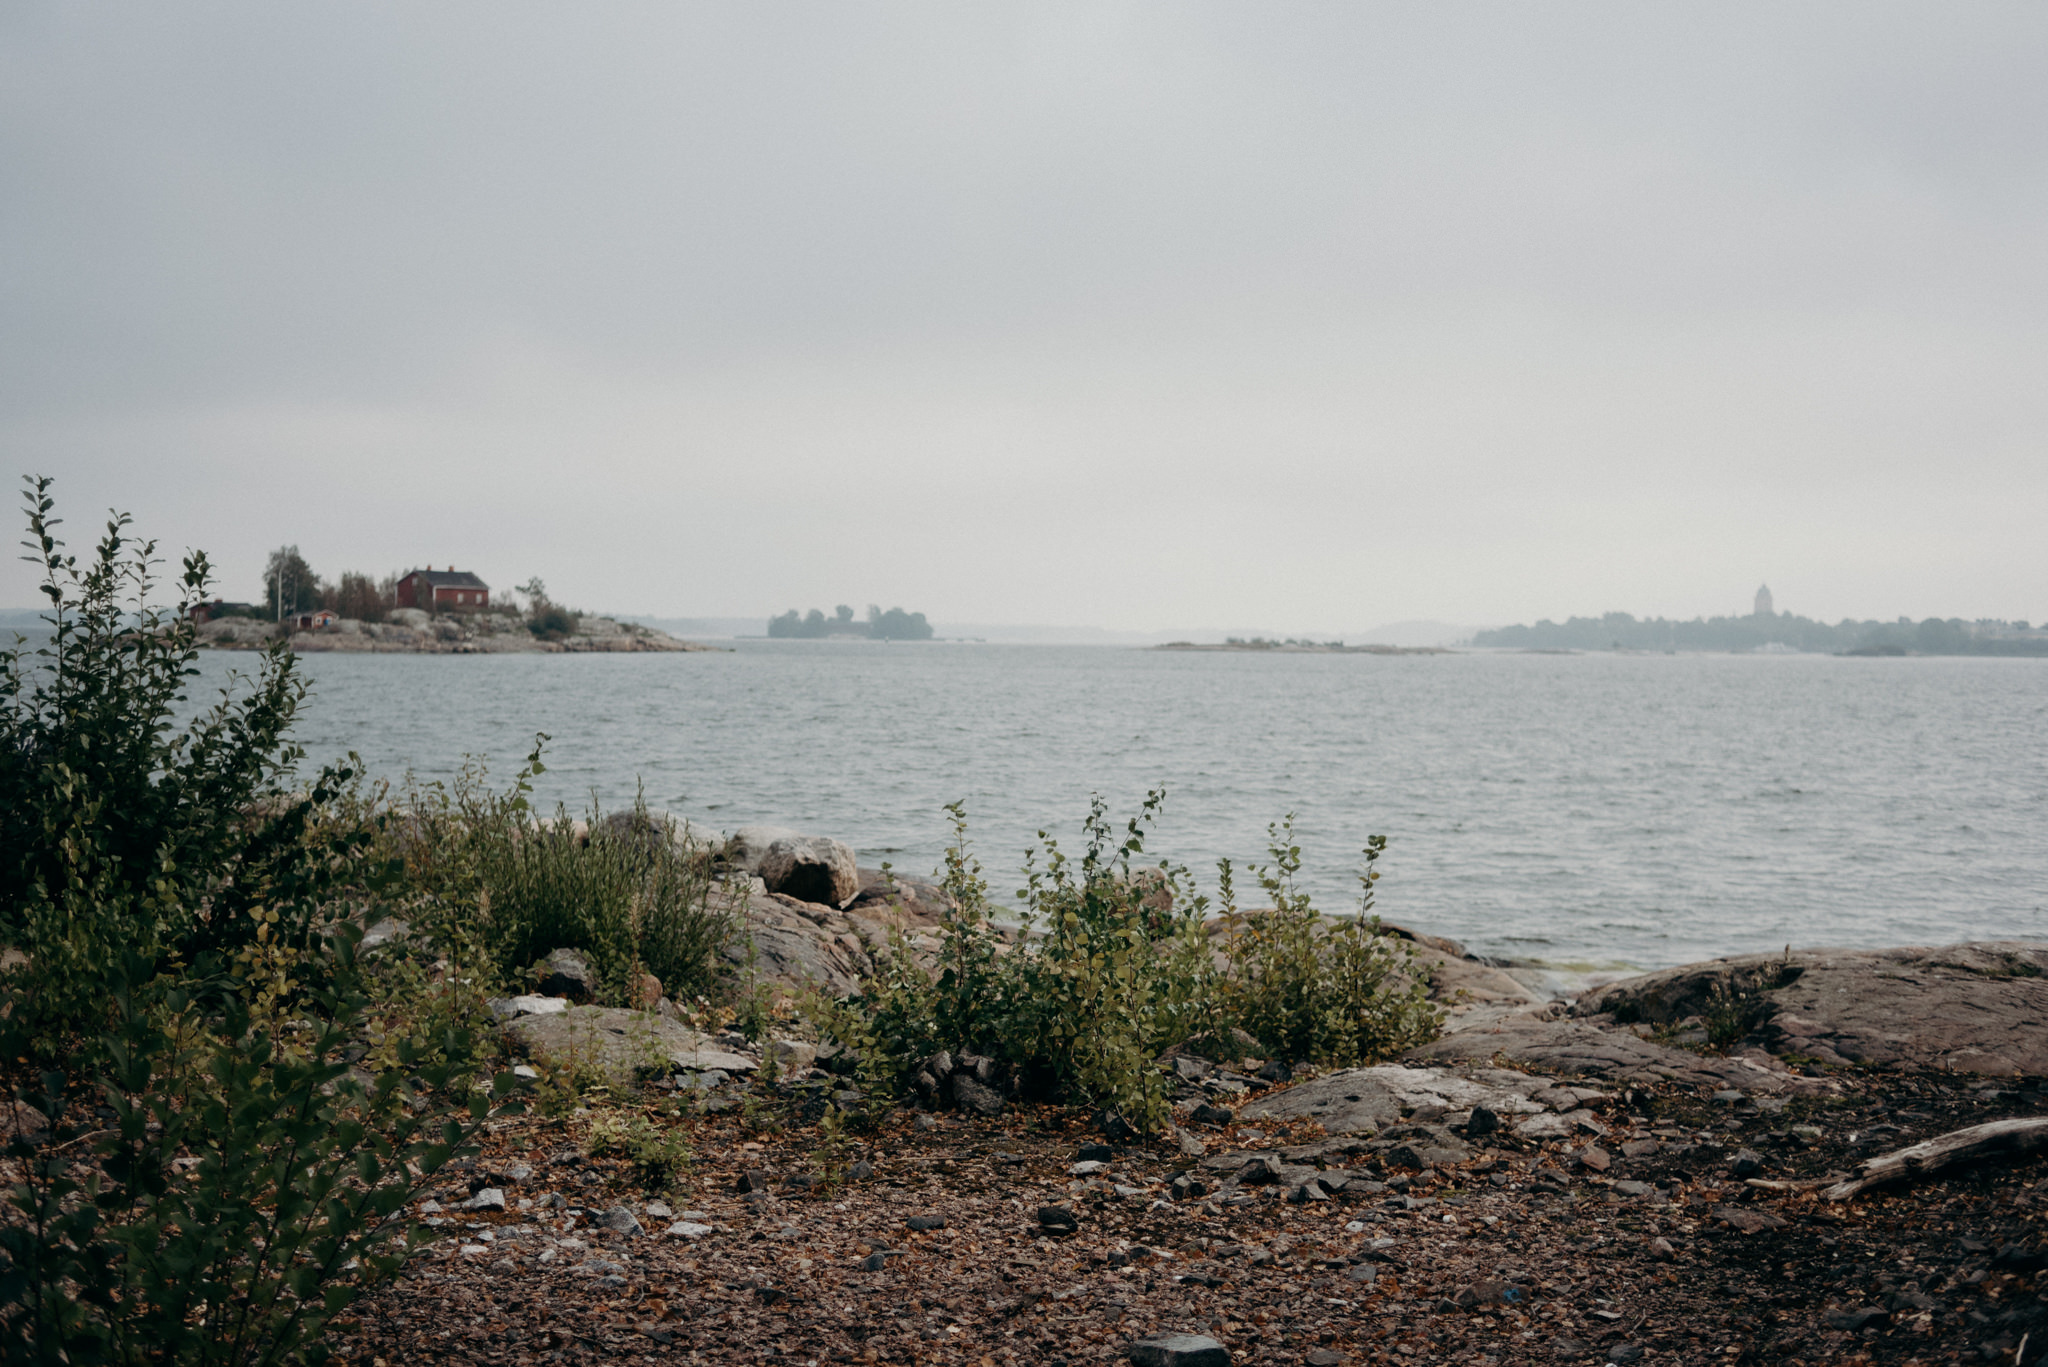 Islands off the coast of Helsinki